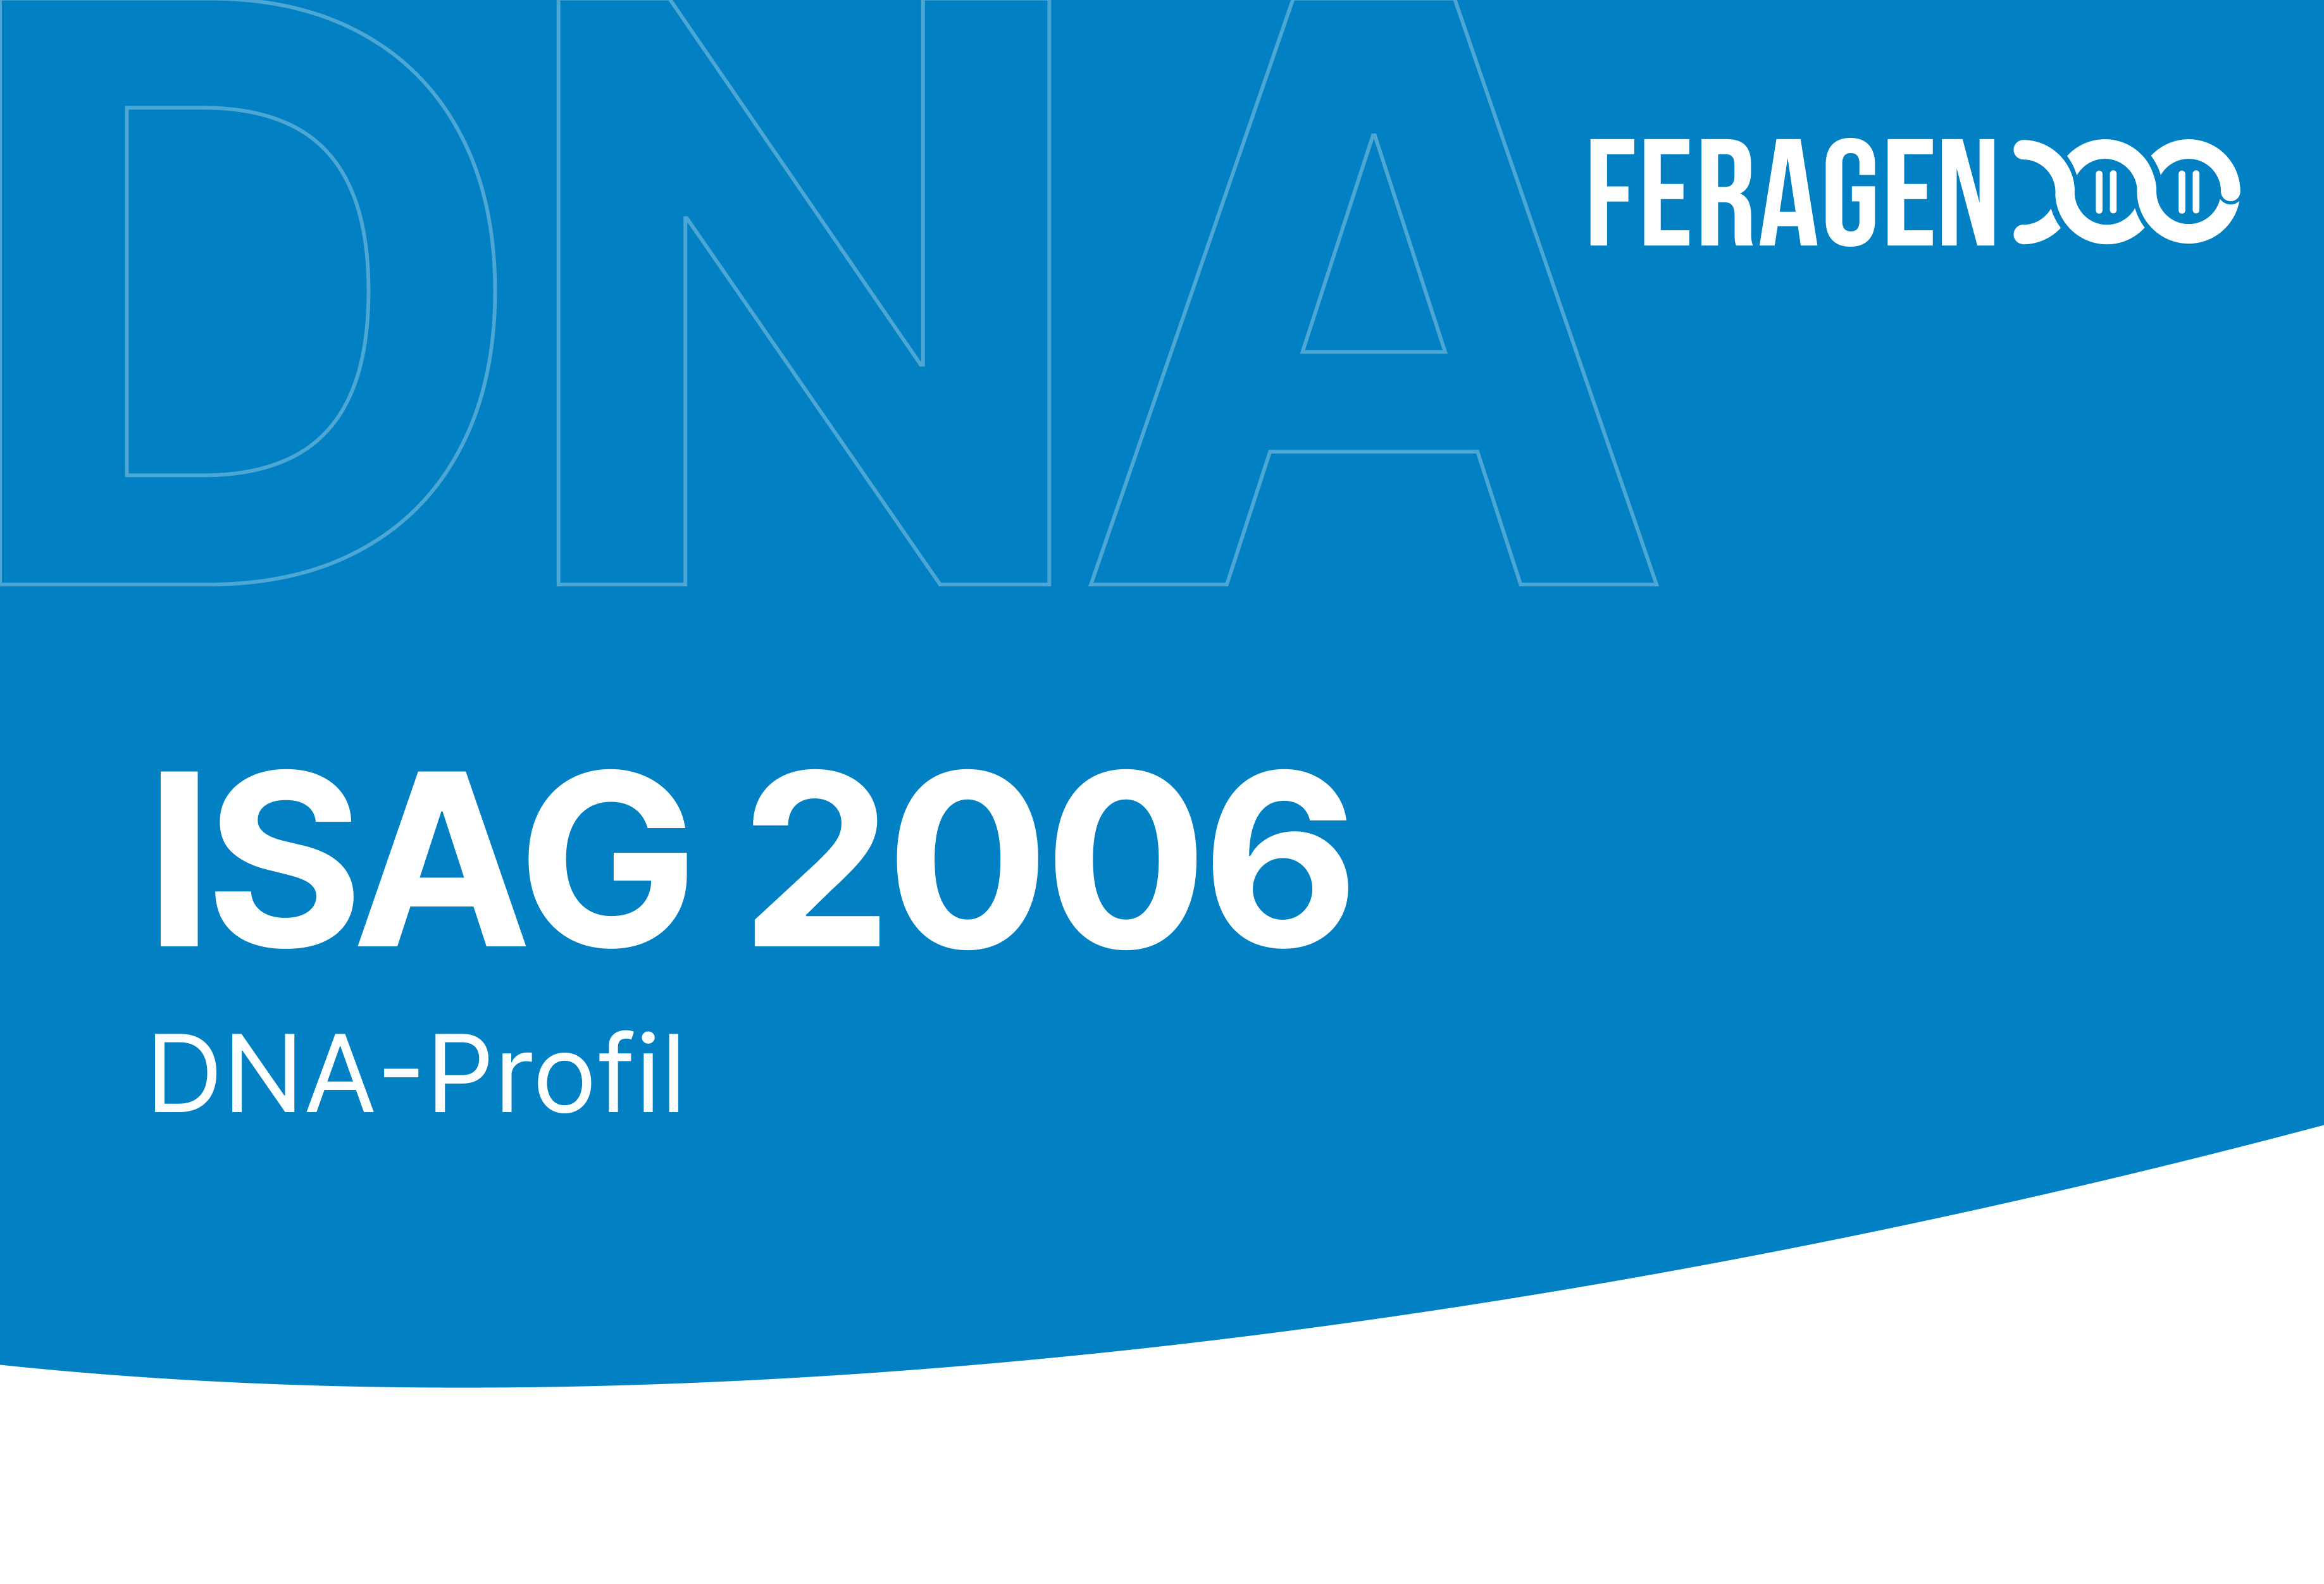 DNA profile (ISAG 2006)